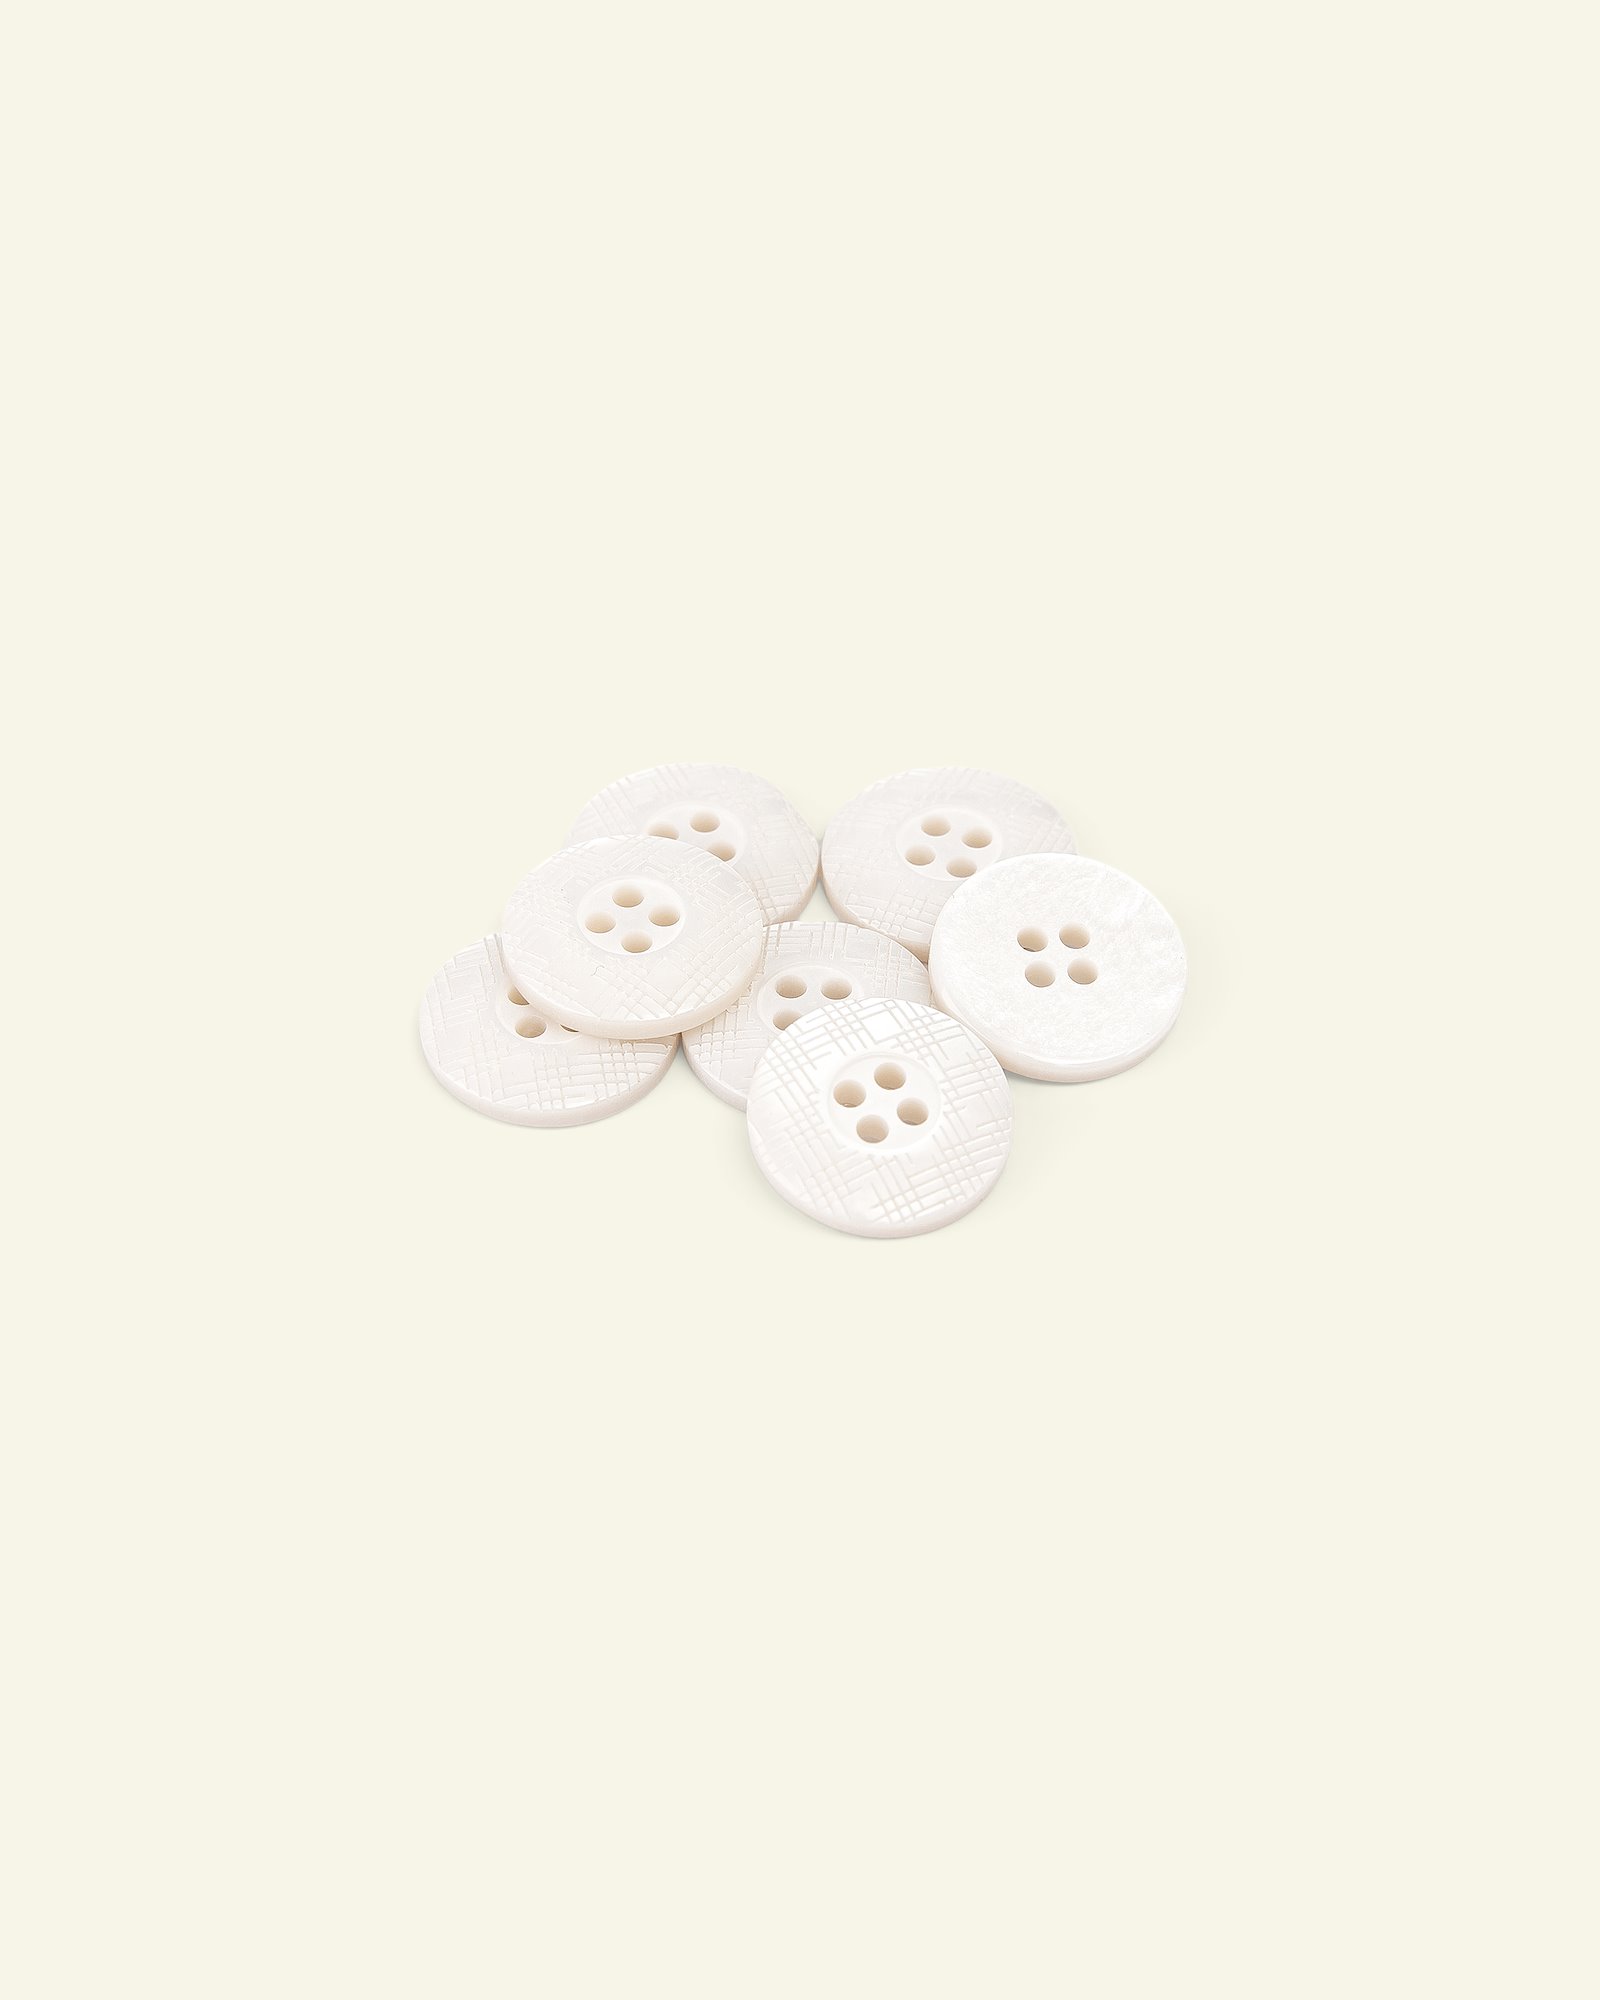 Button 4-holes 18mm white 7pcs 33104_pack